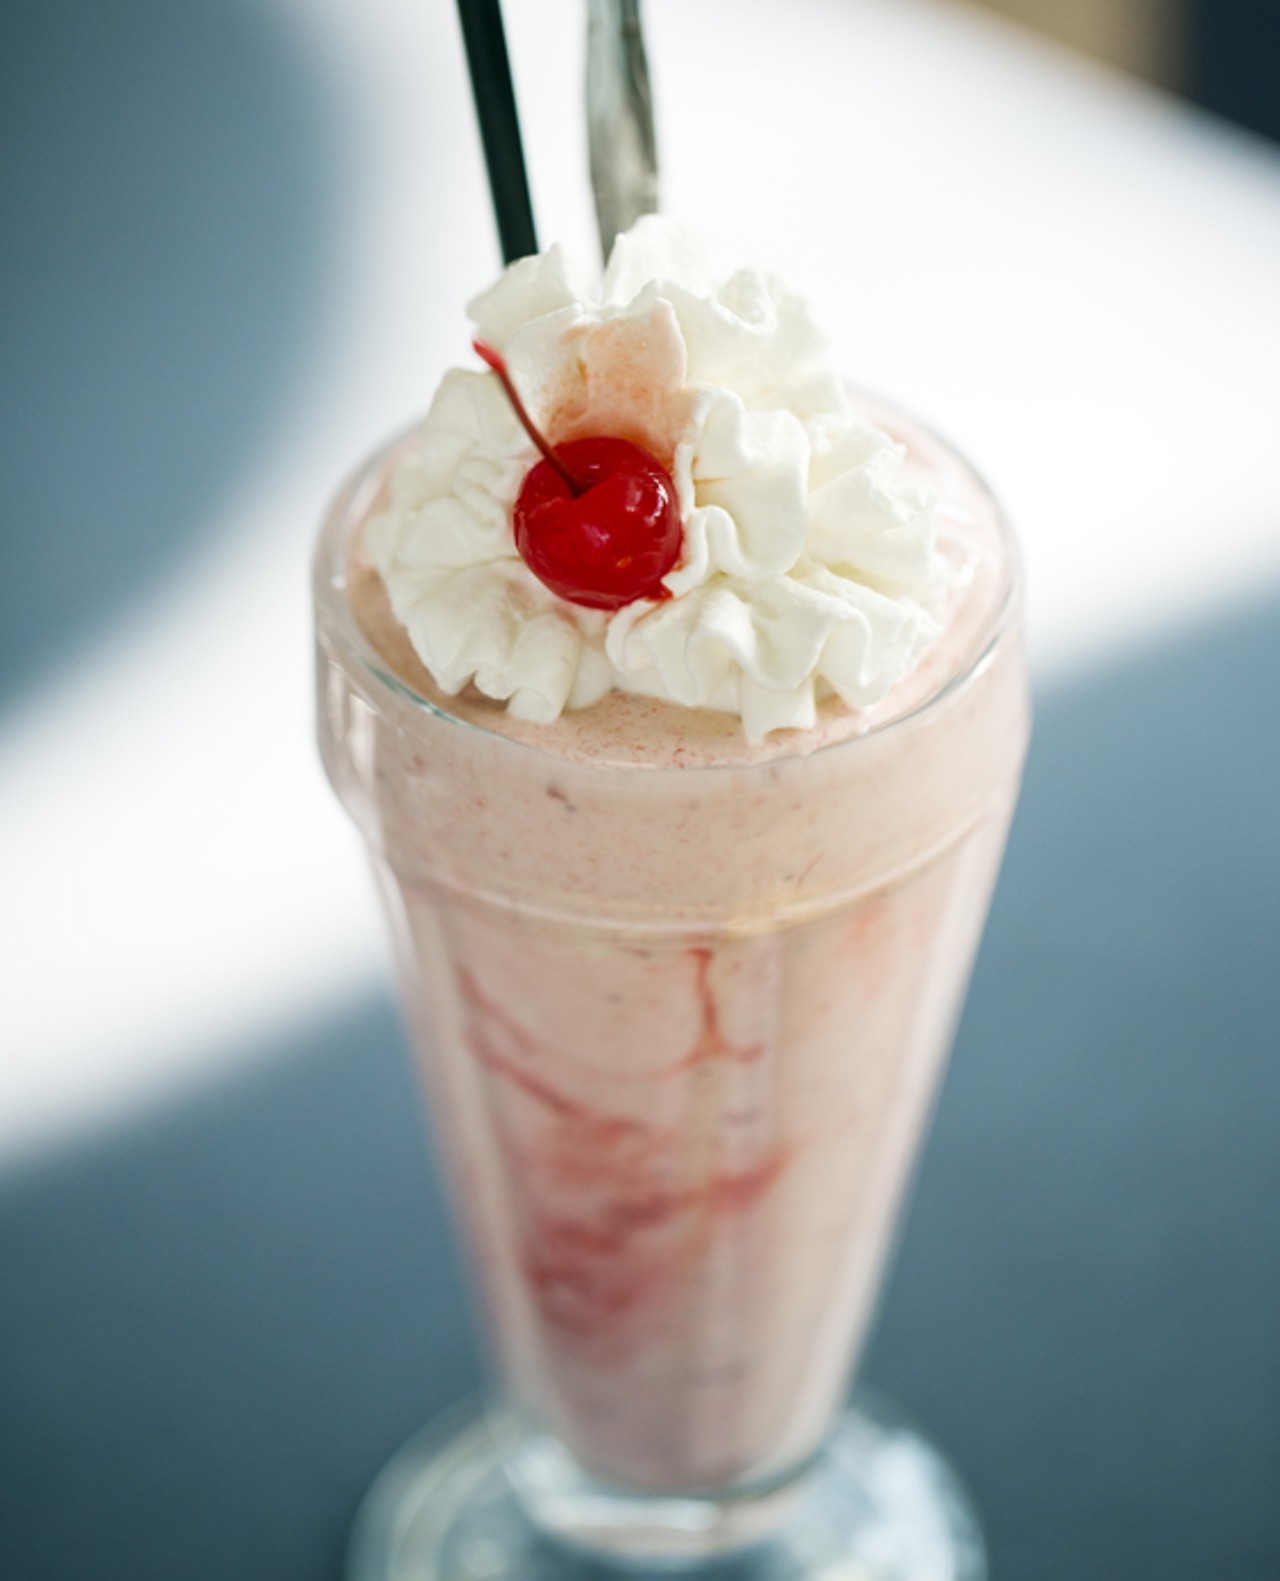 Strawberry milkshake with a cherry on top.